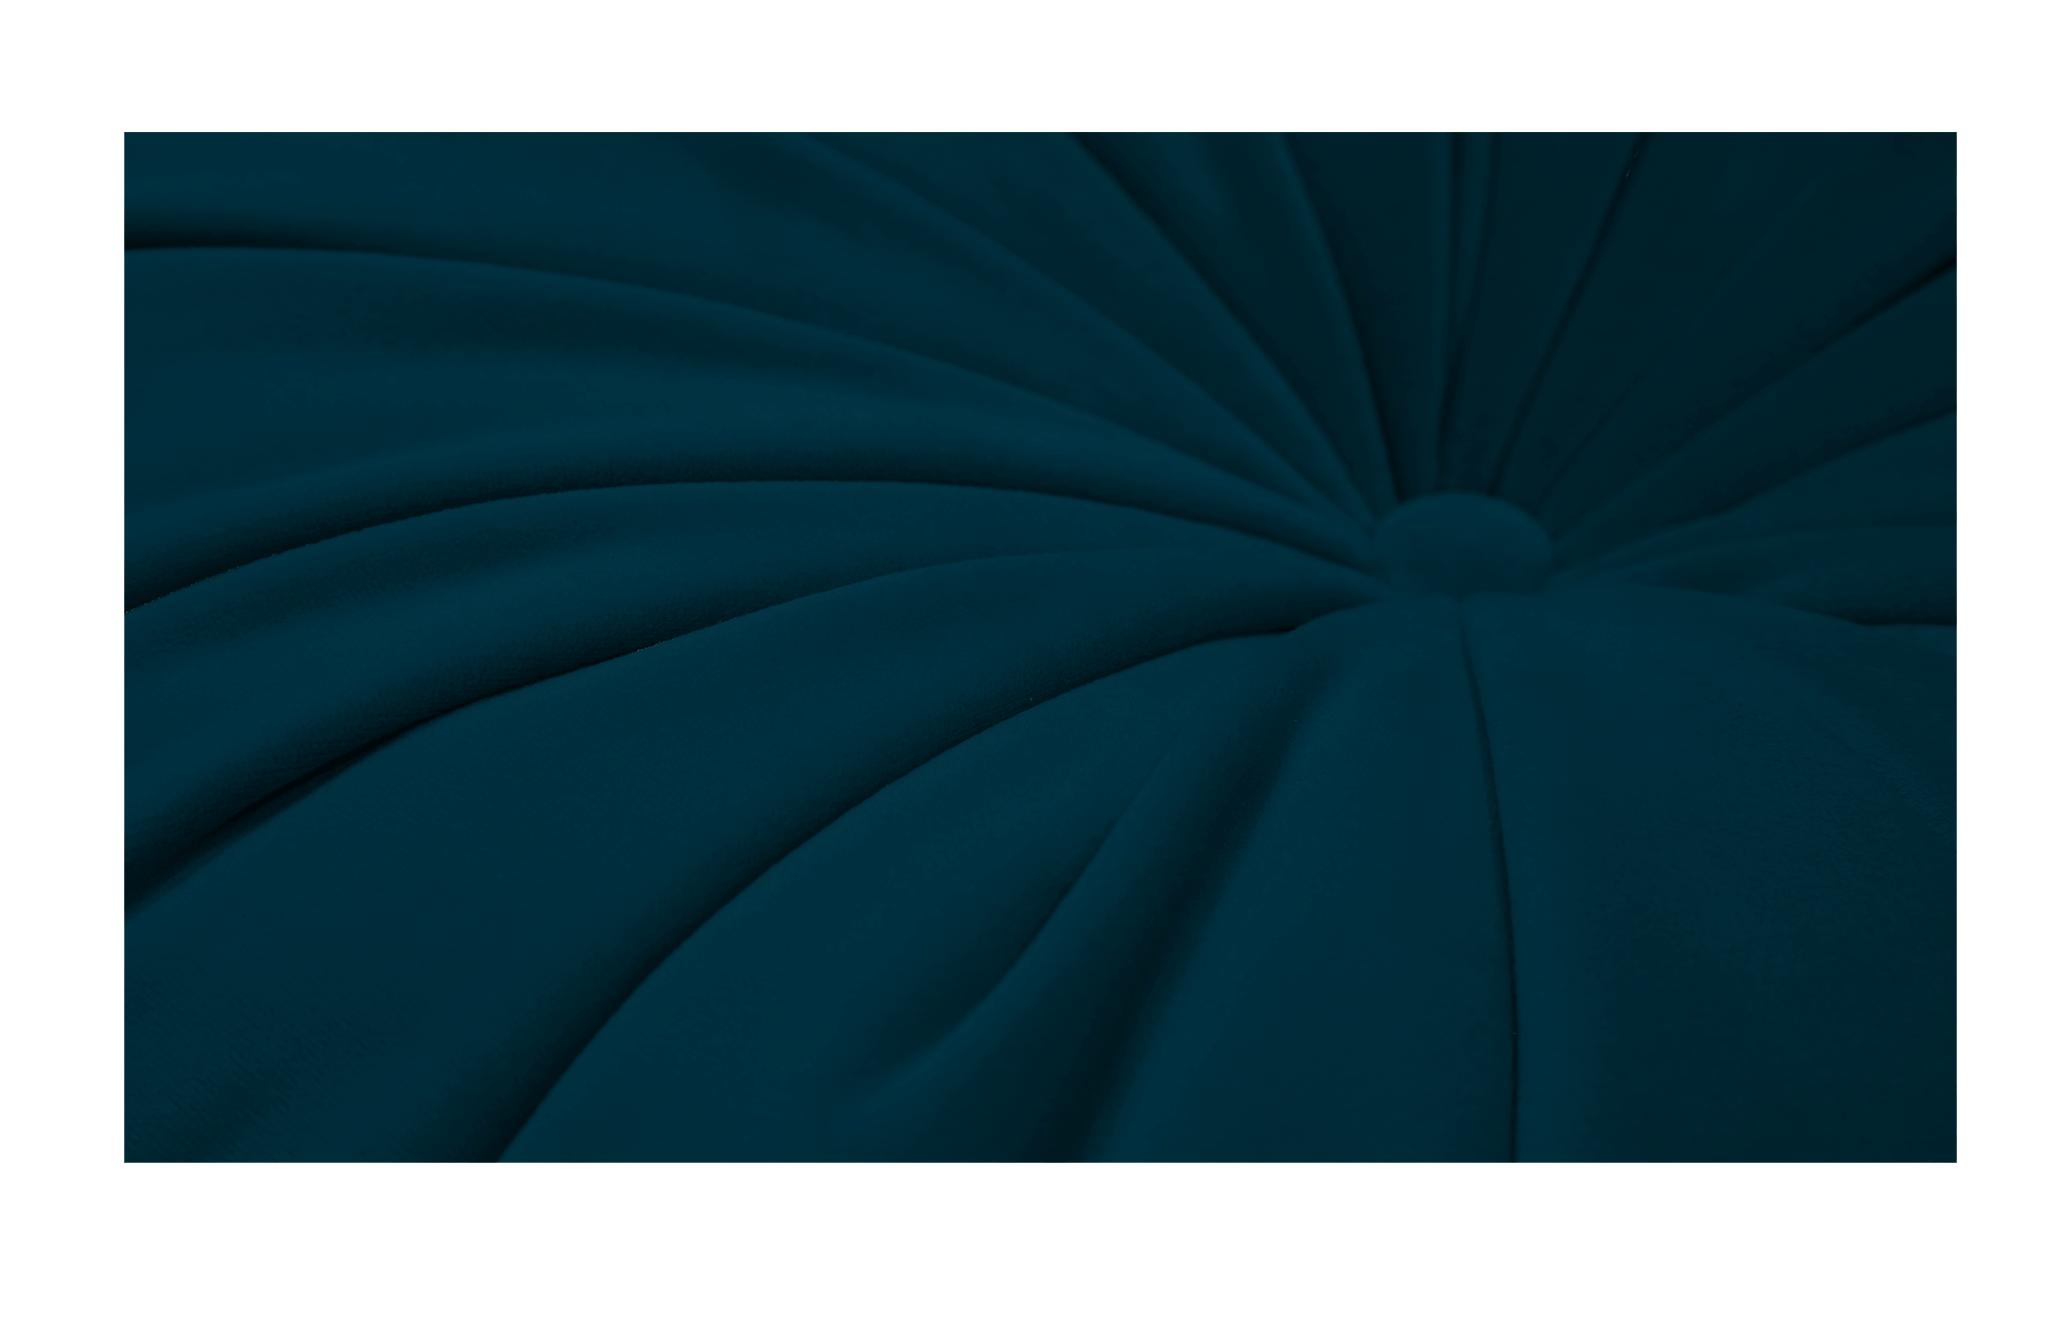 Blue Minka Mid Century Modern Pleated Round Pillow - Key Largo Zenith Teal - Image 2